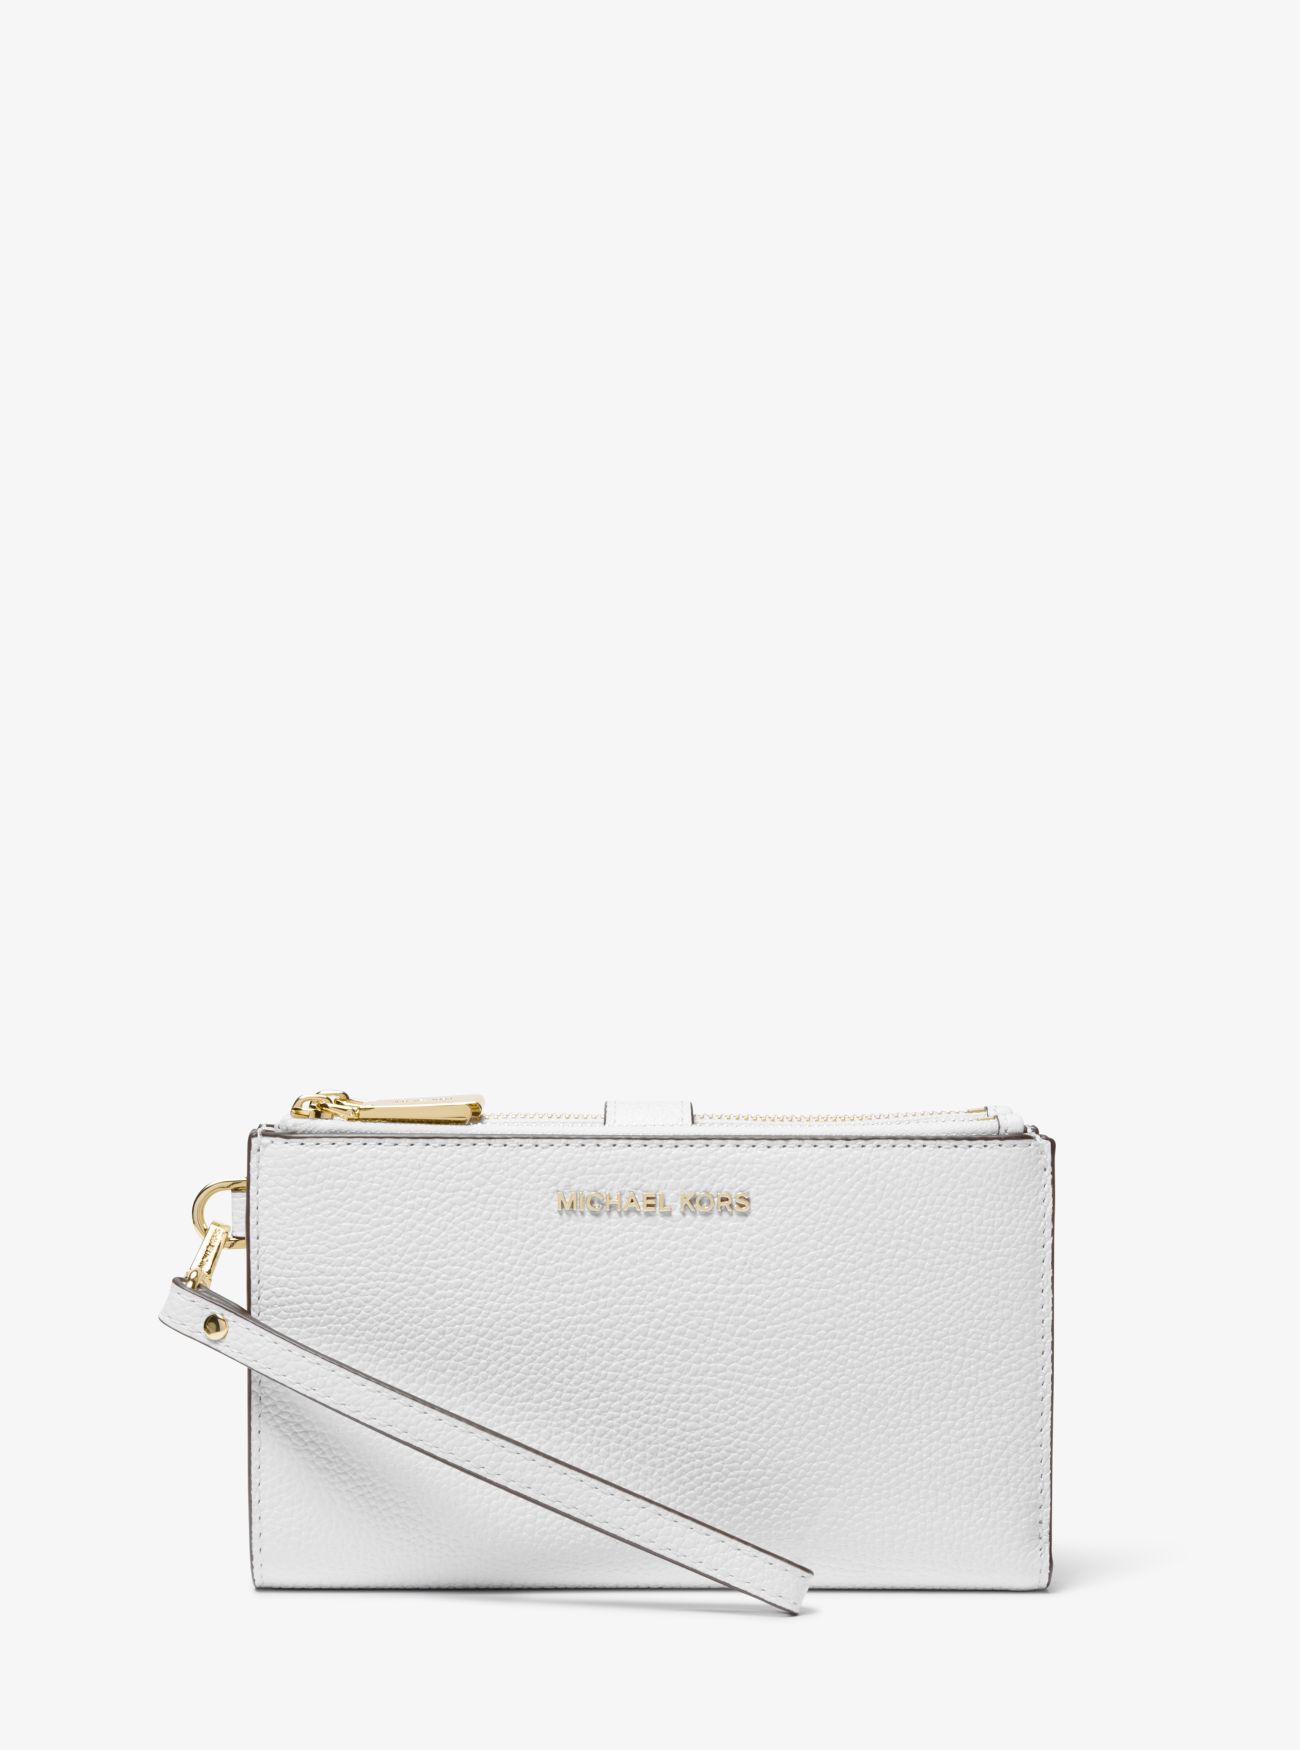 MK Adele Pebbled Leather Smartphone Wallet - White - Michael Kors